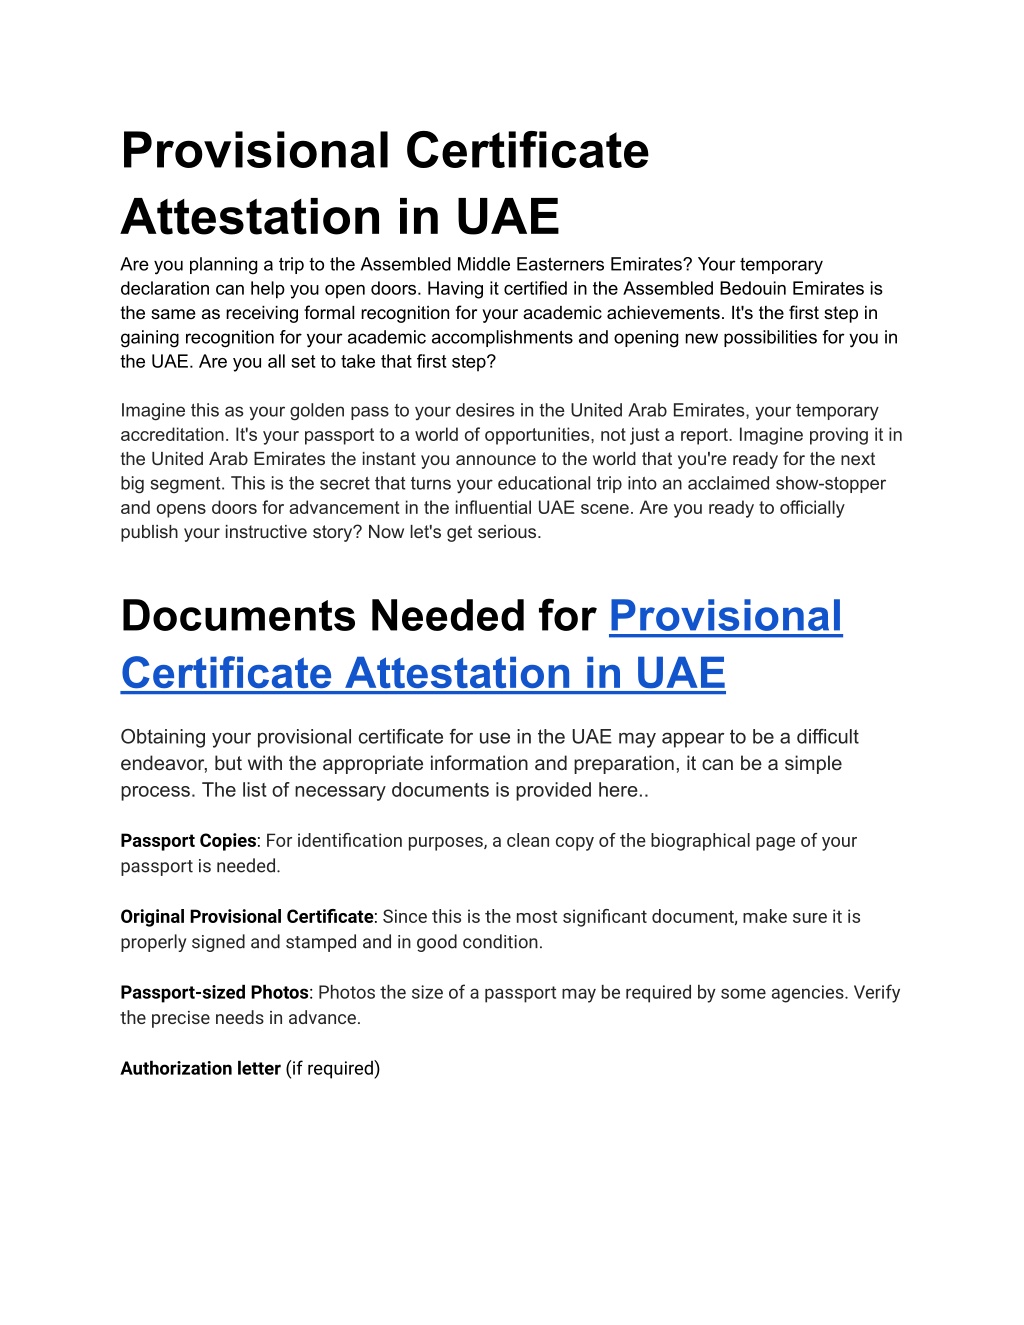 provisional certificate attestation in uae l.w